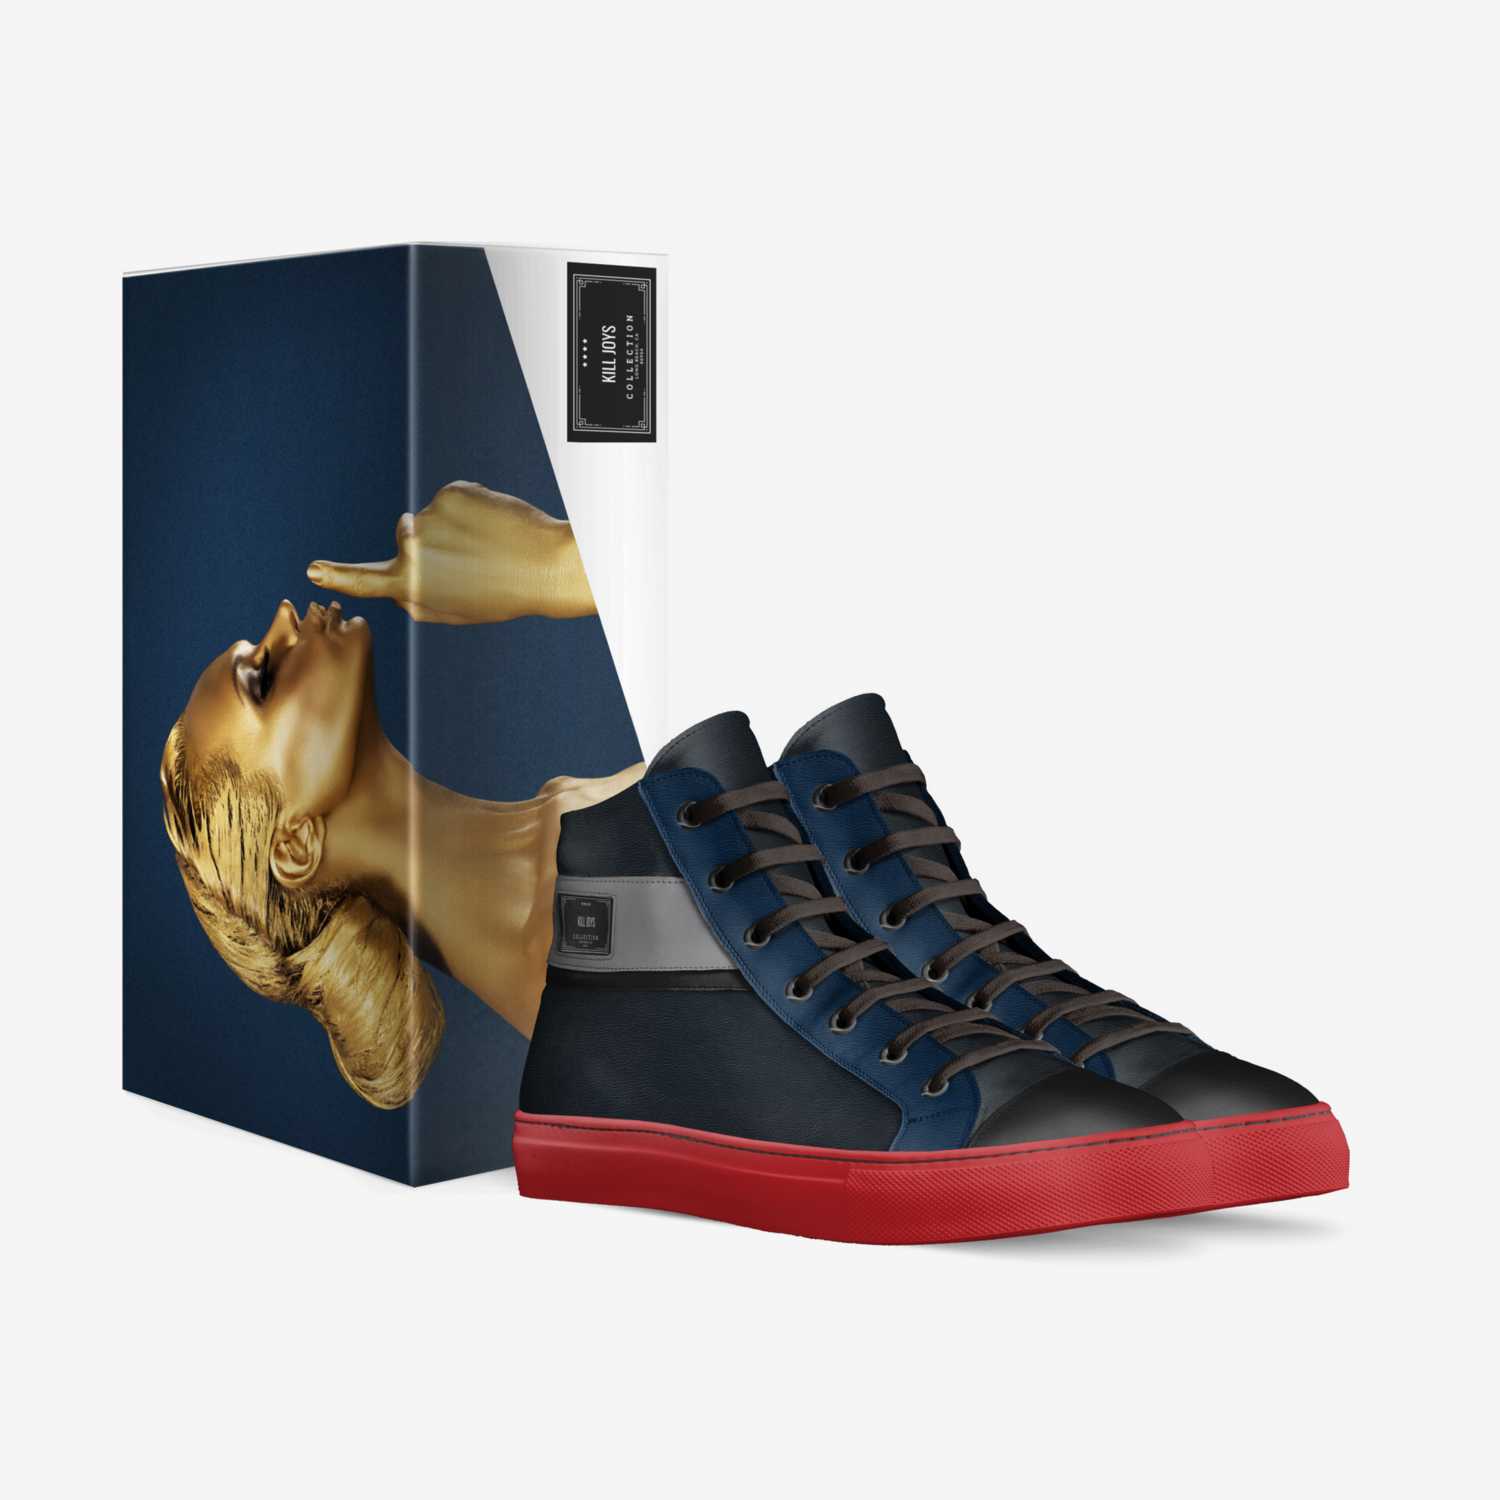 Kill Joys custom made in Italy shoes by Darrell Dargan | Box view